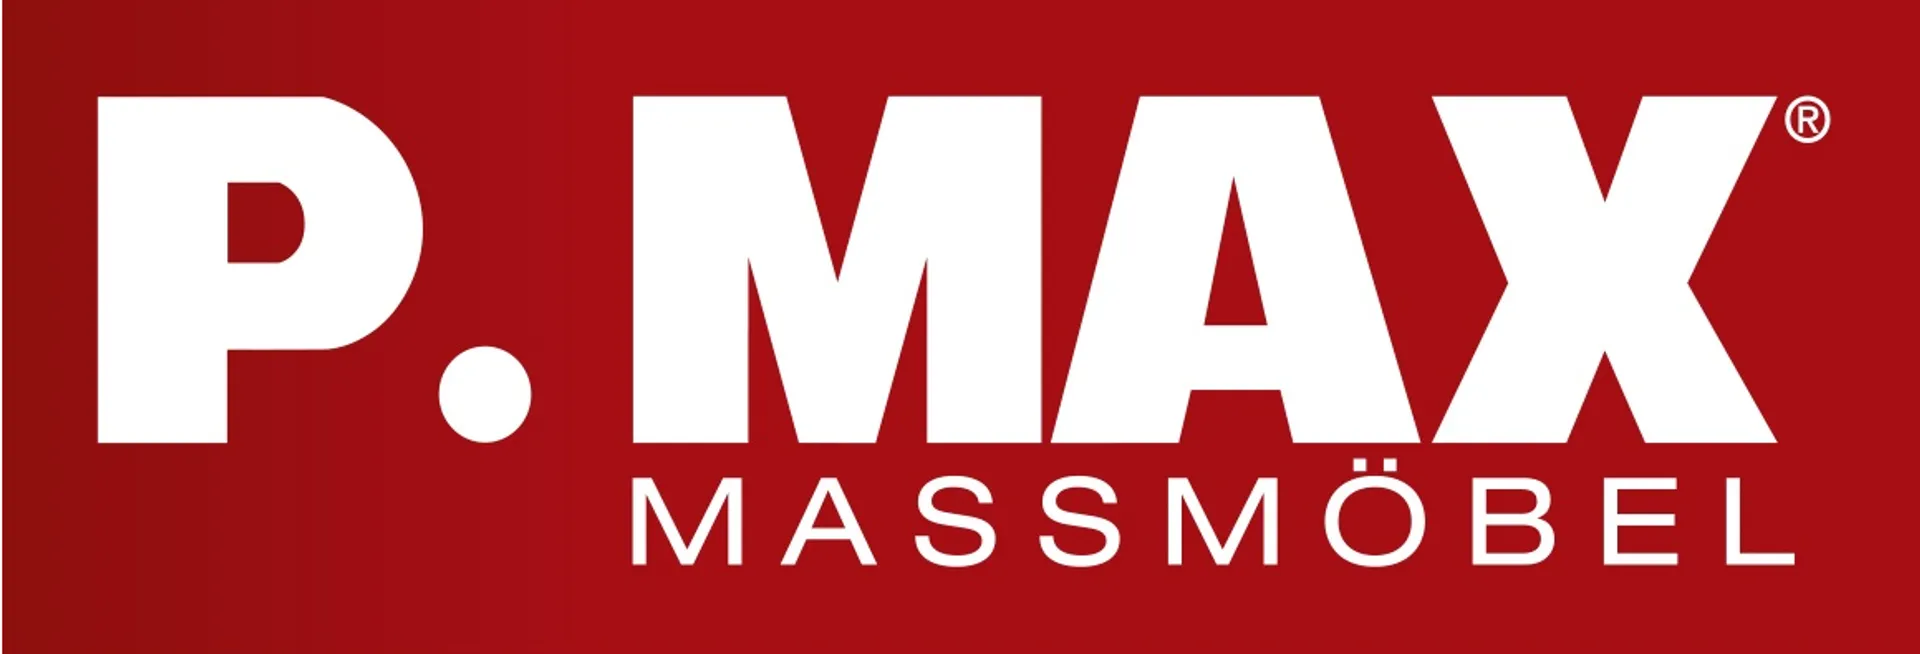 PETER MAX logo die aktuell Flugblatt